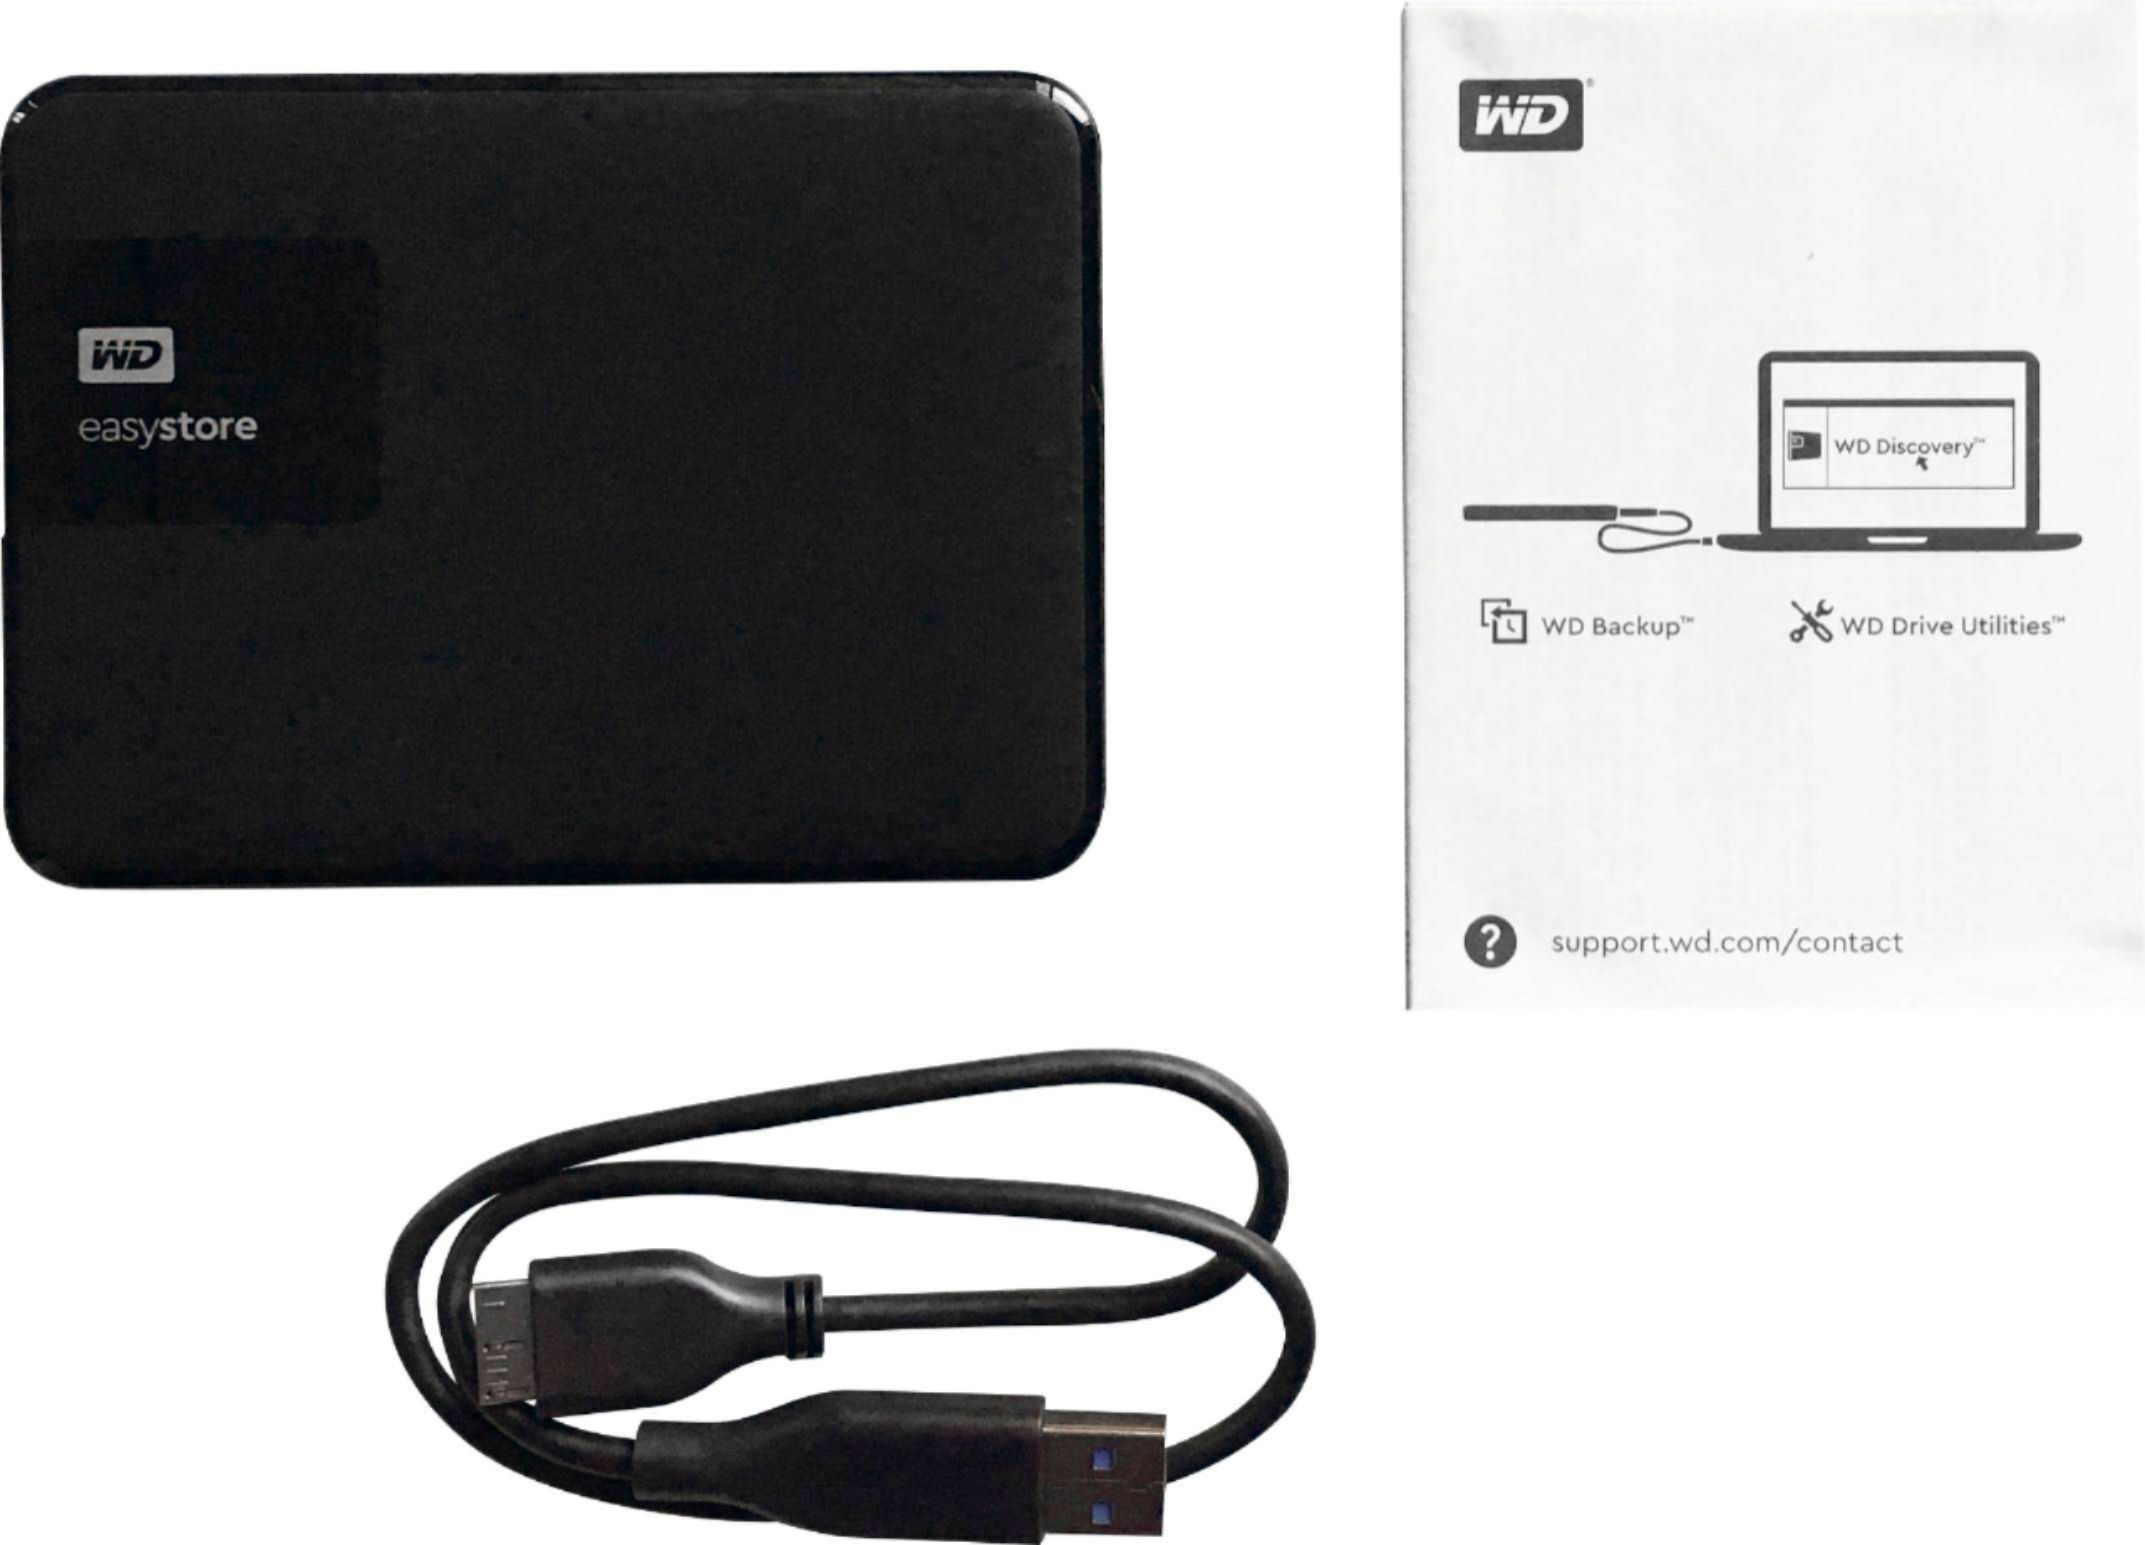 Best Buy: WD easystore 4TB External USB 3.0 Portable Hard Drive